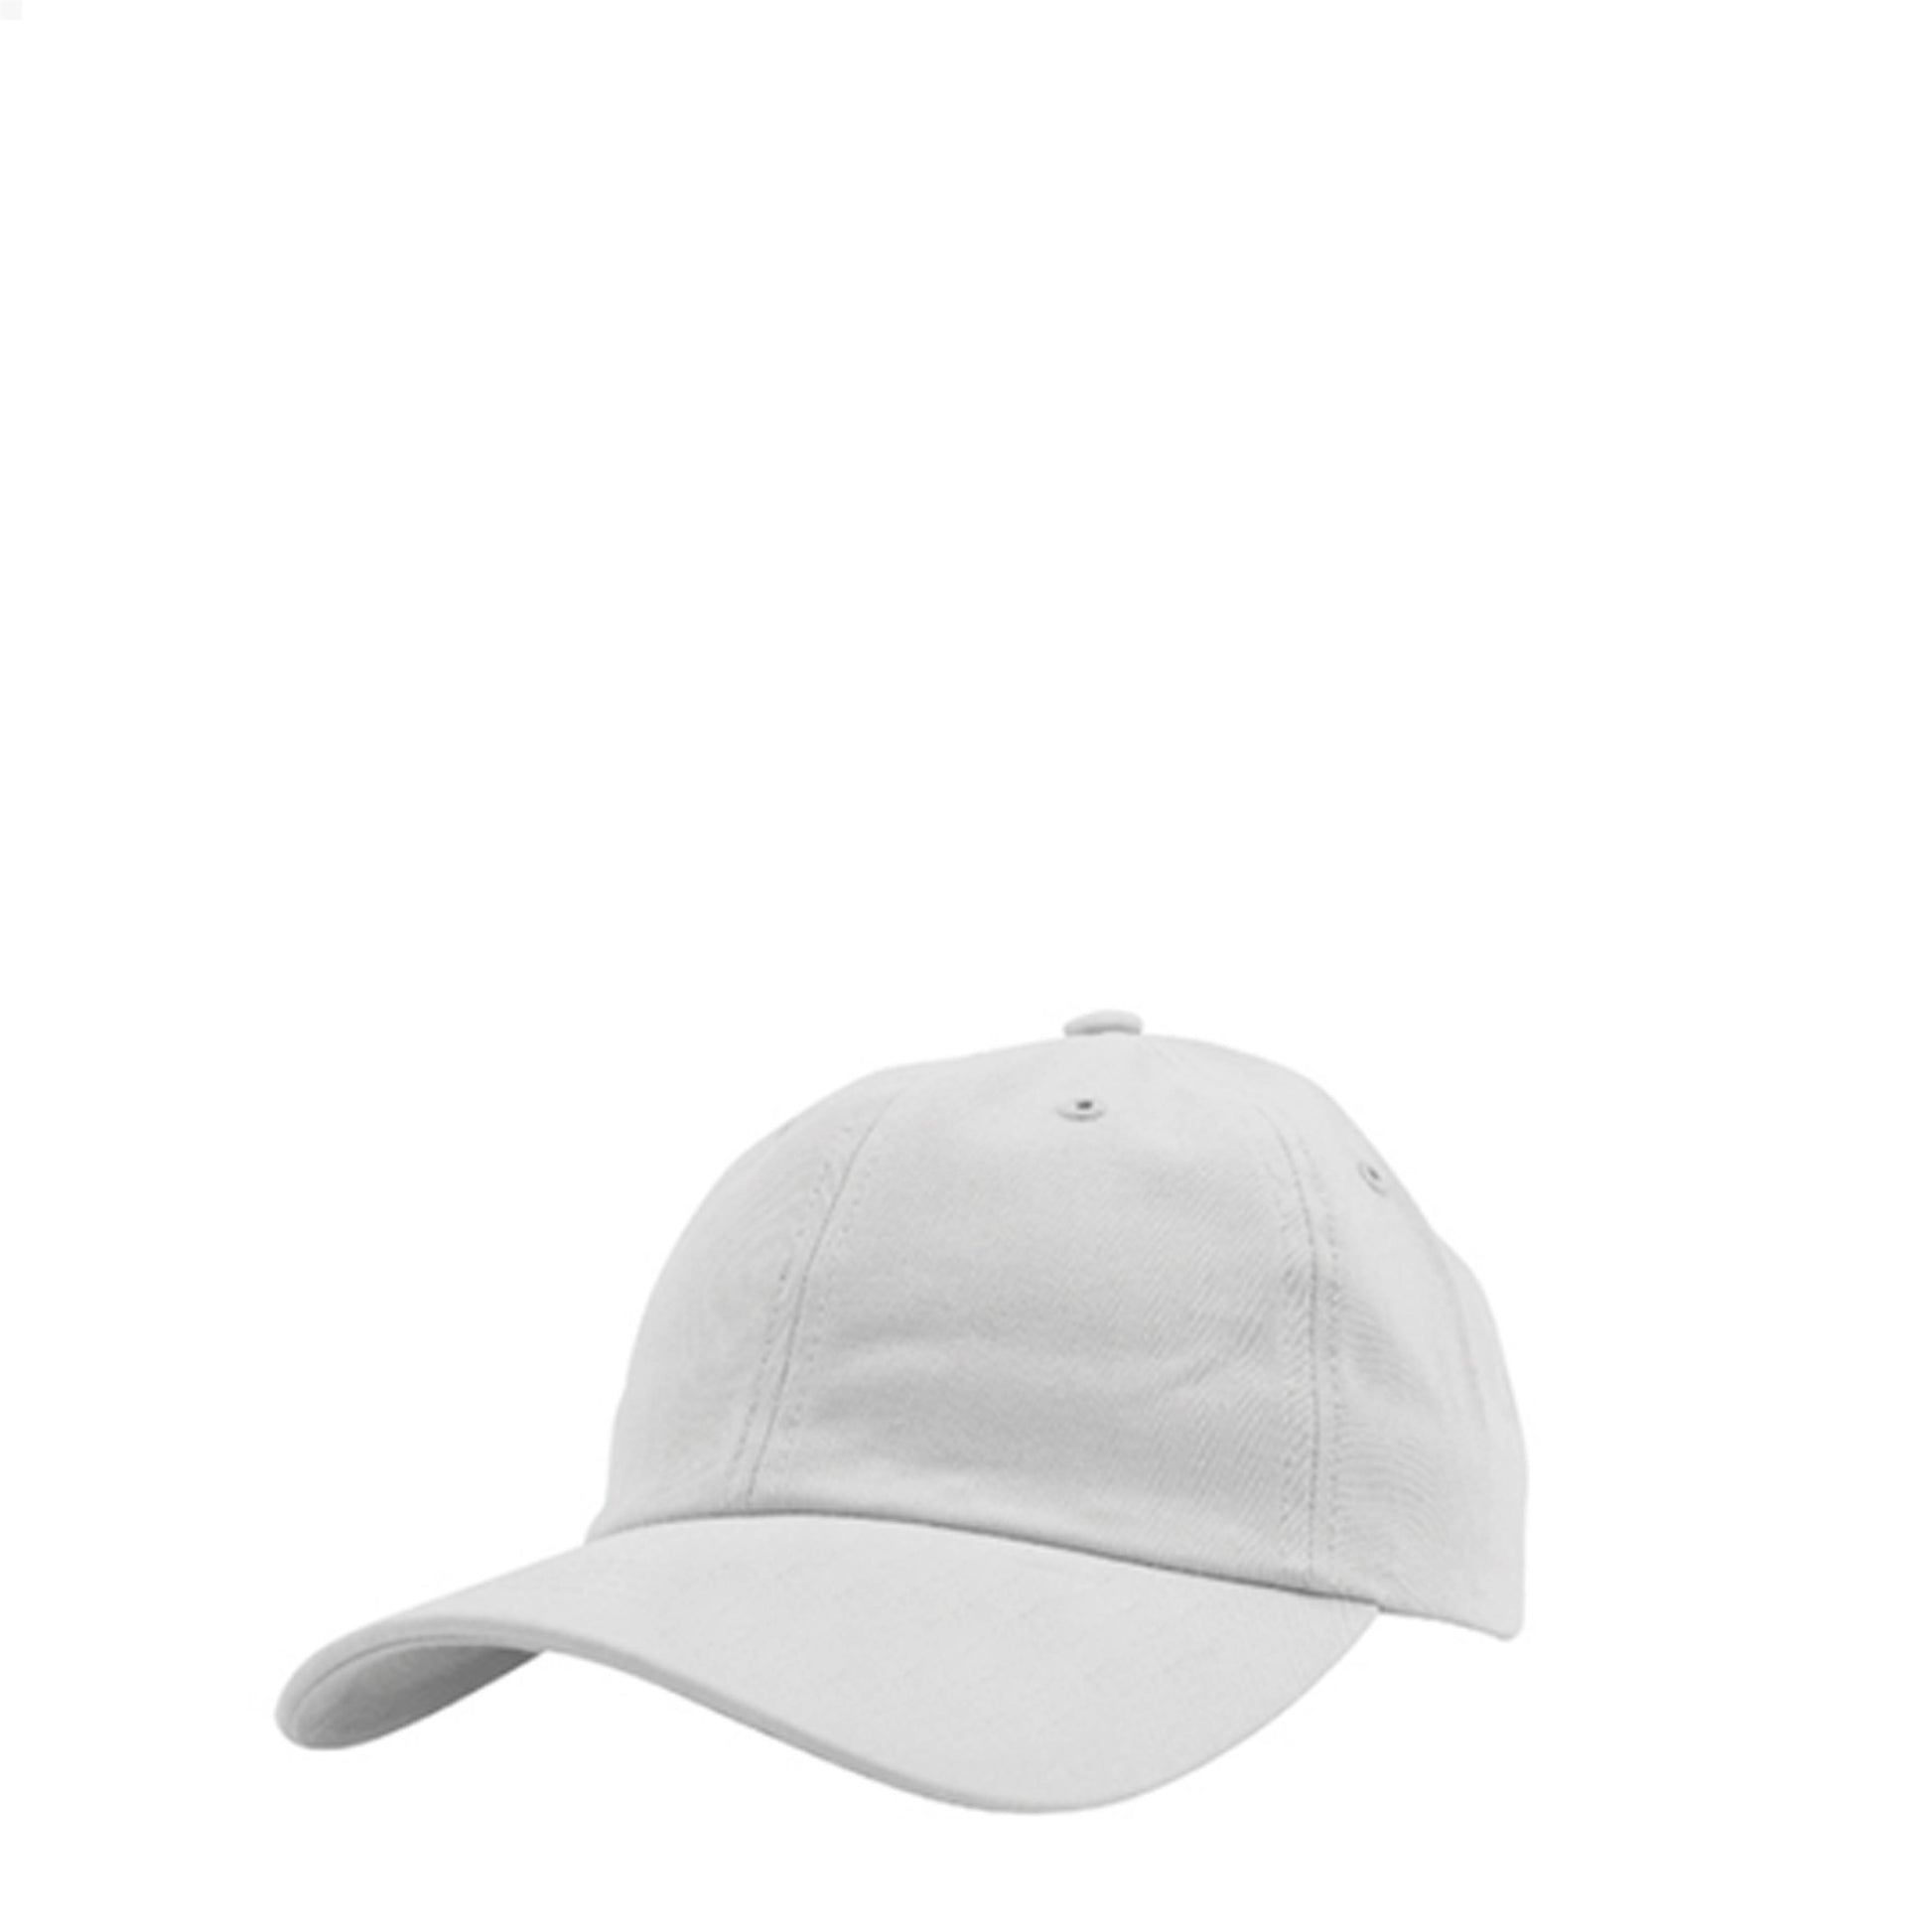 Núnoo Nunoo cap white Hat White